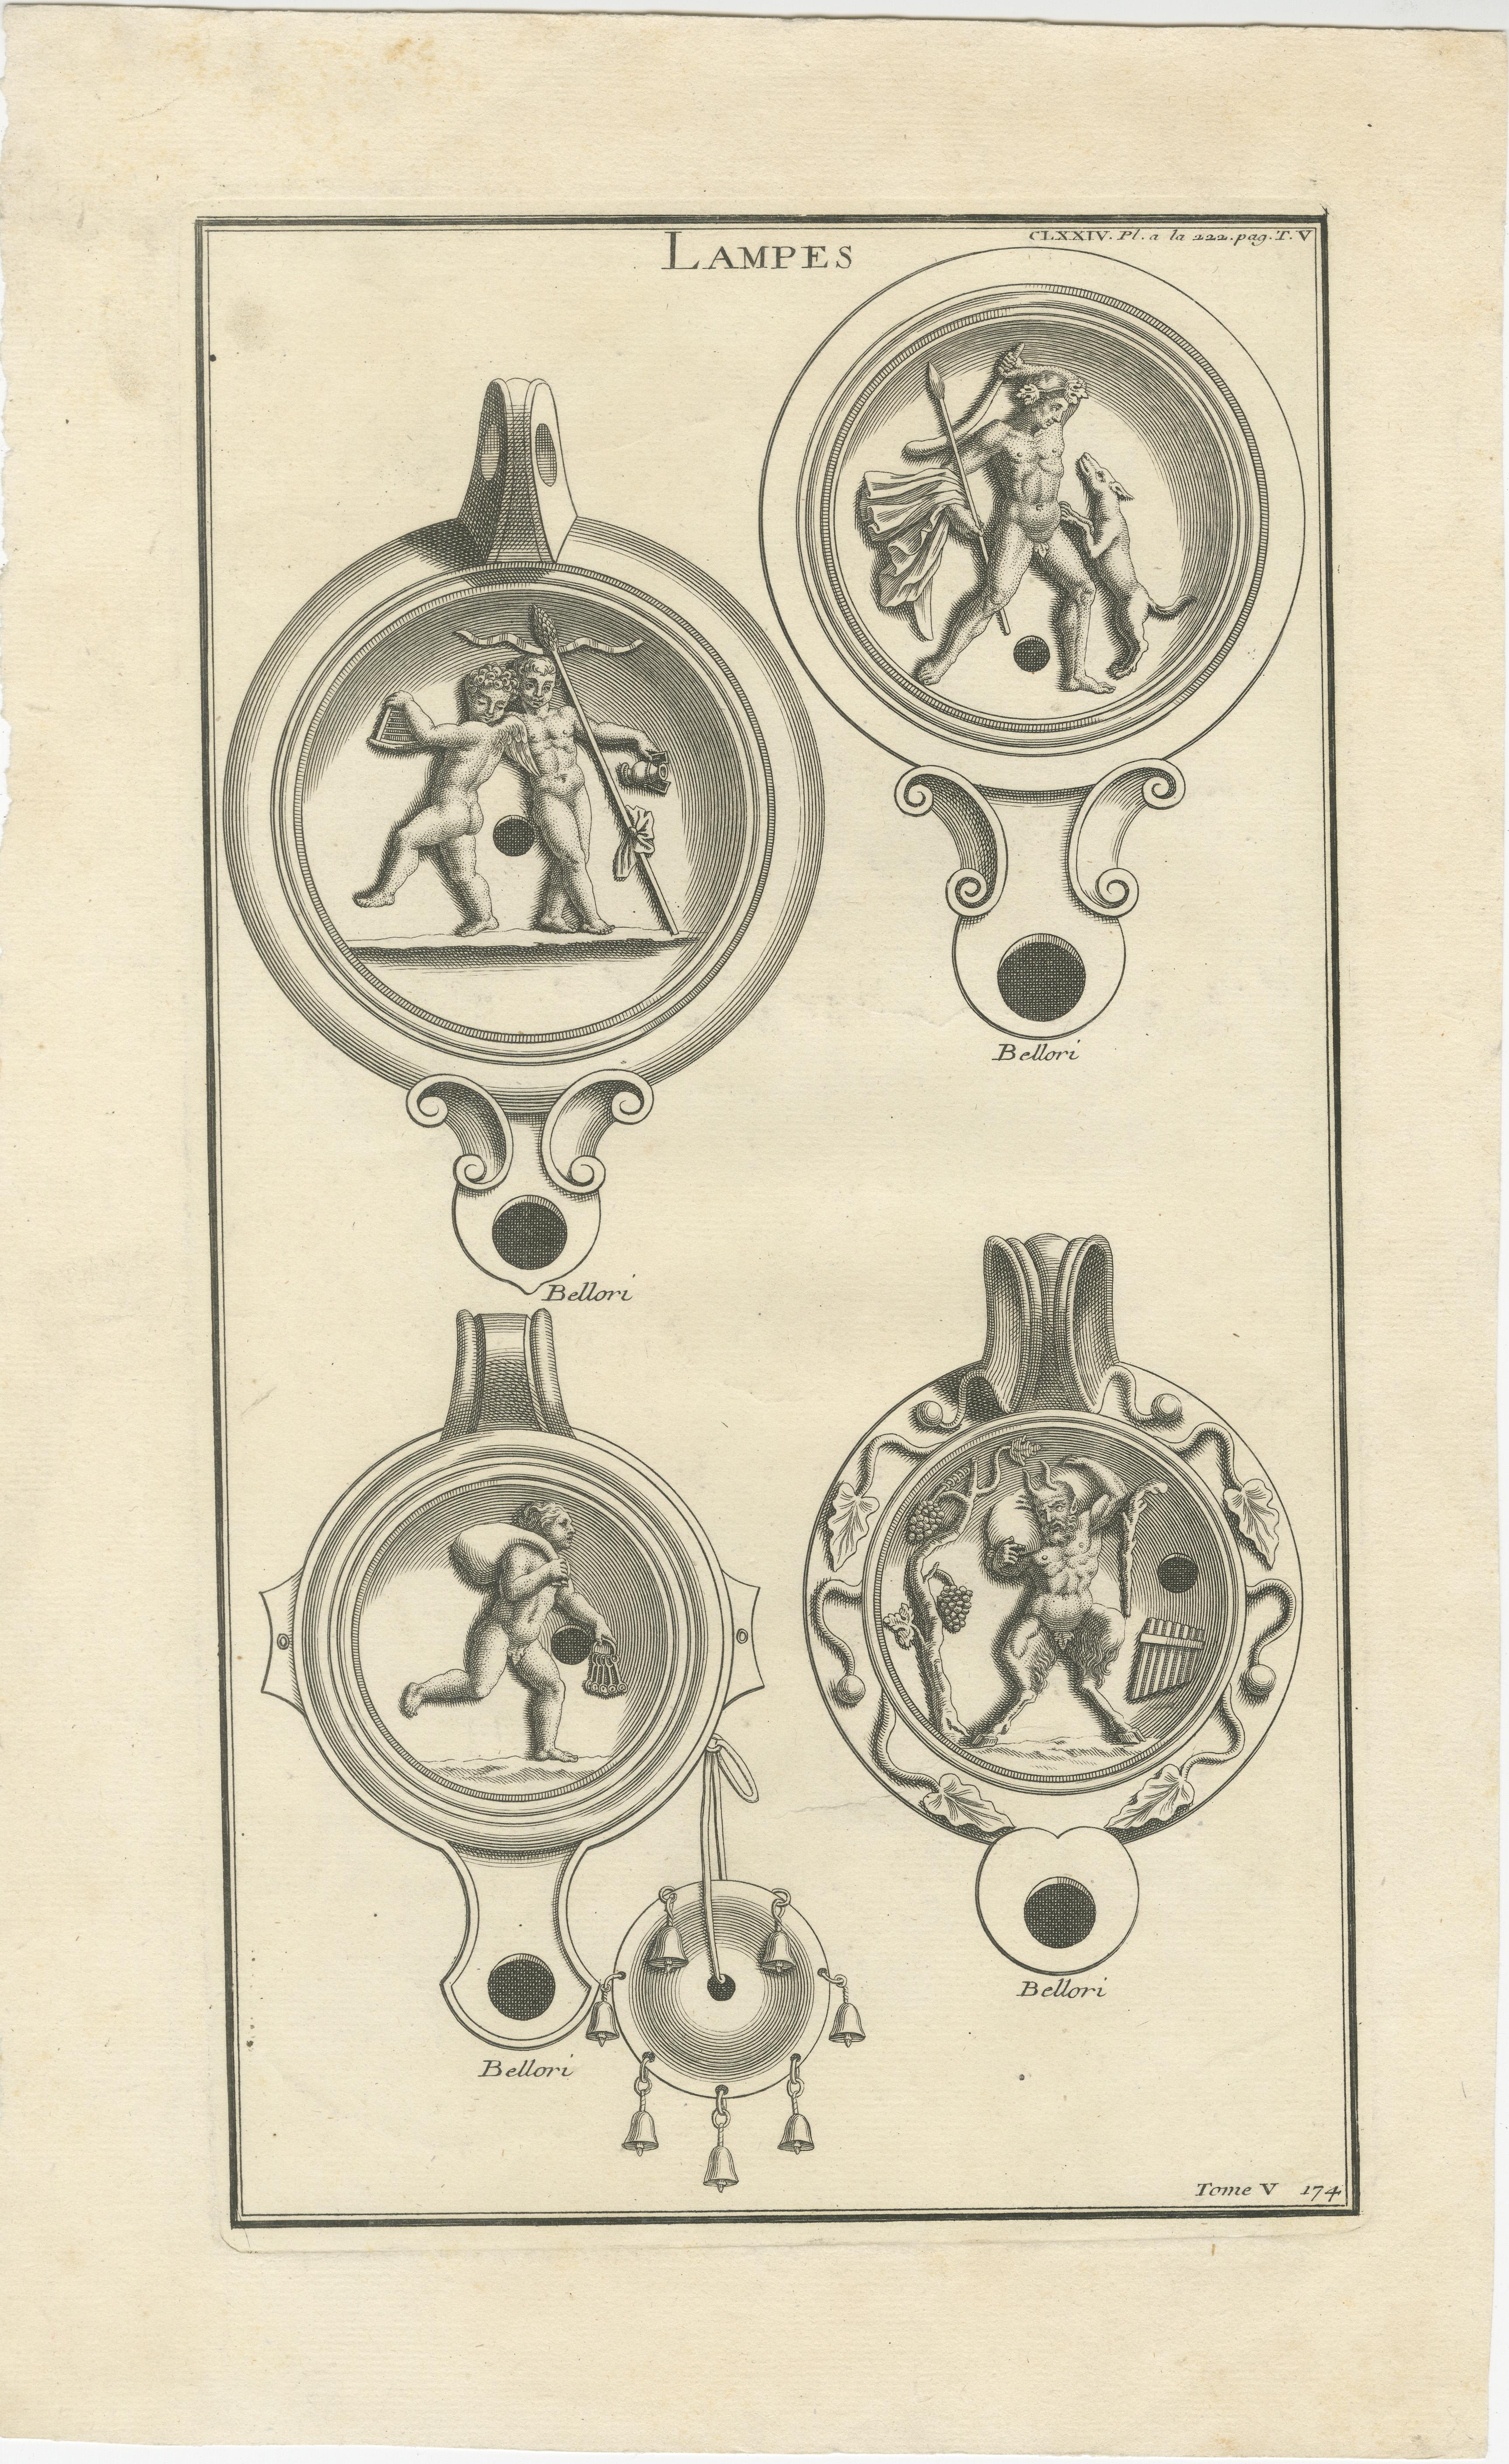 These set of original antique engravings are from Bernard de Montfaucon's 